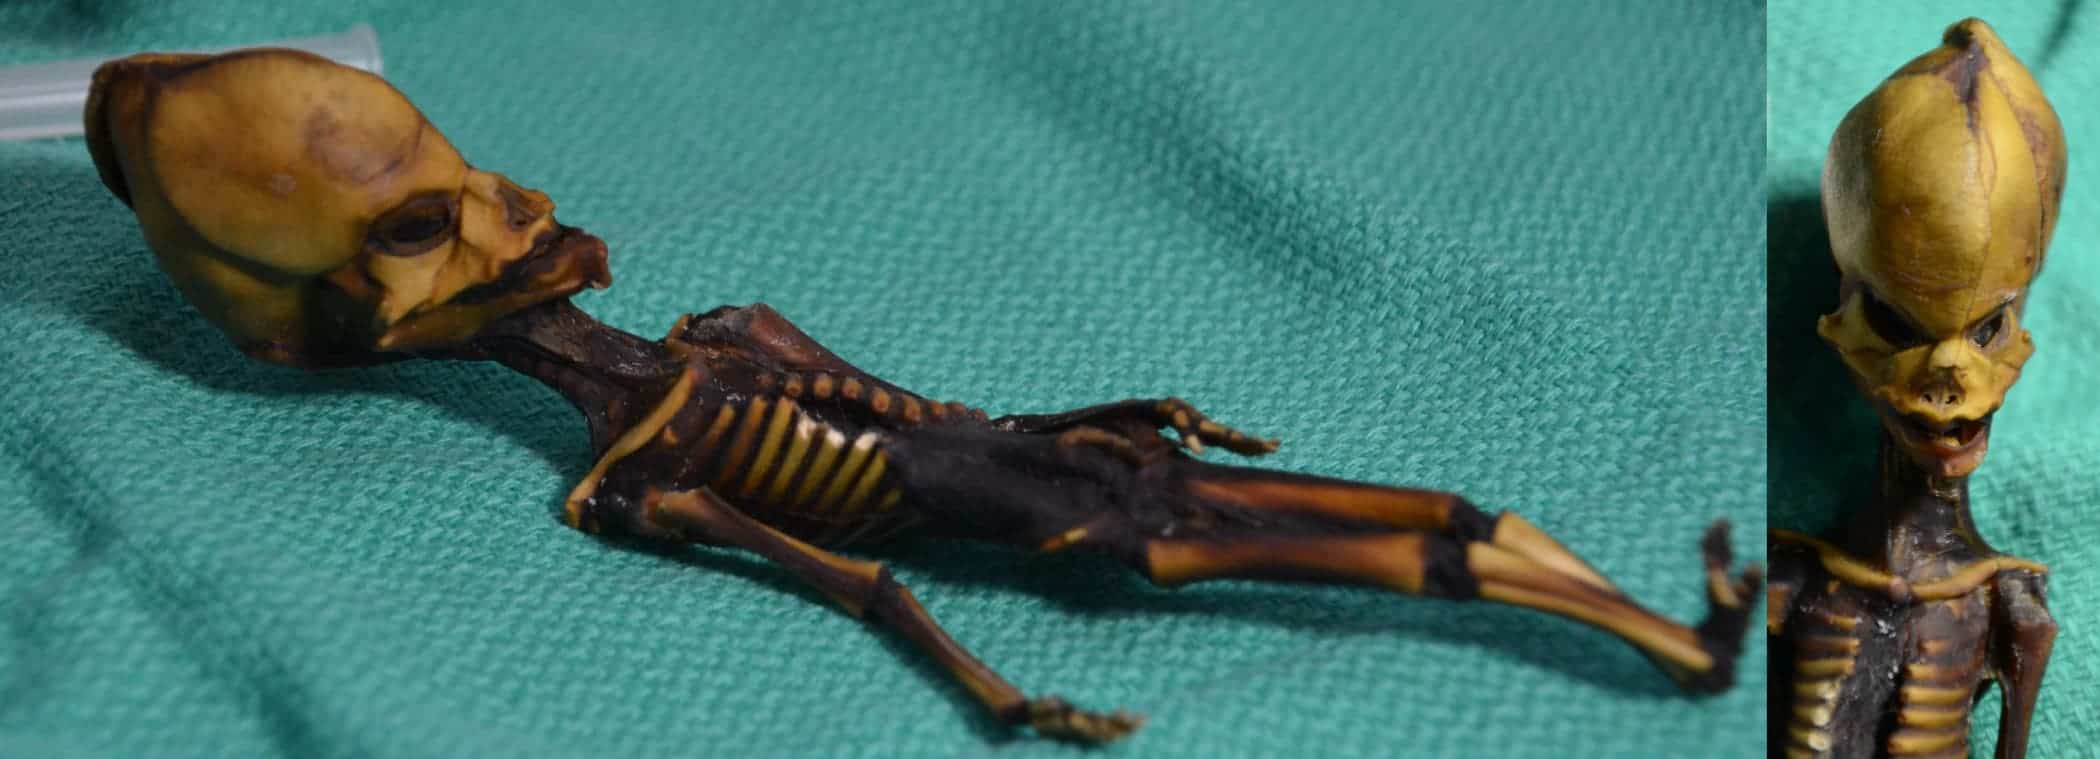 The alien-like mummified specimen from Atacama region of Chile. Image credits: Bhattacharya S et al. 2018.